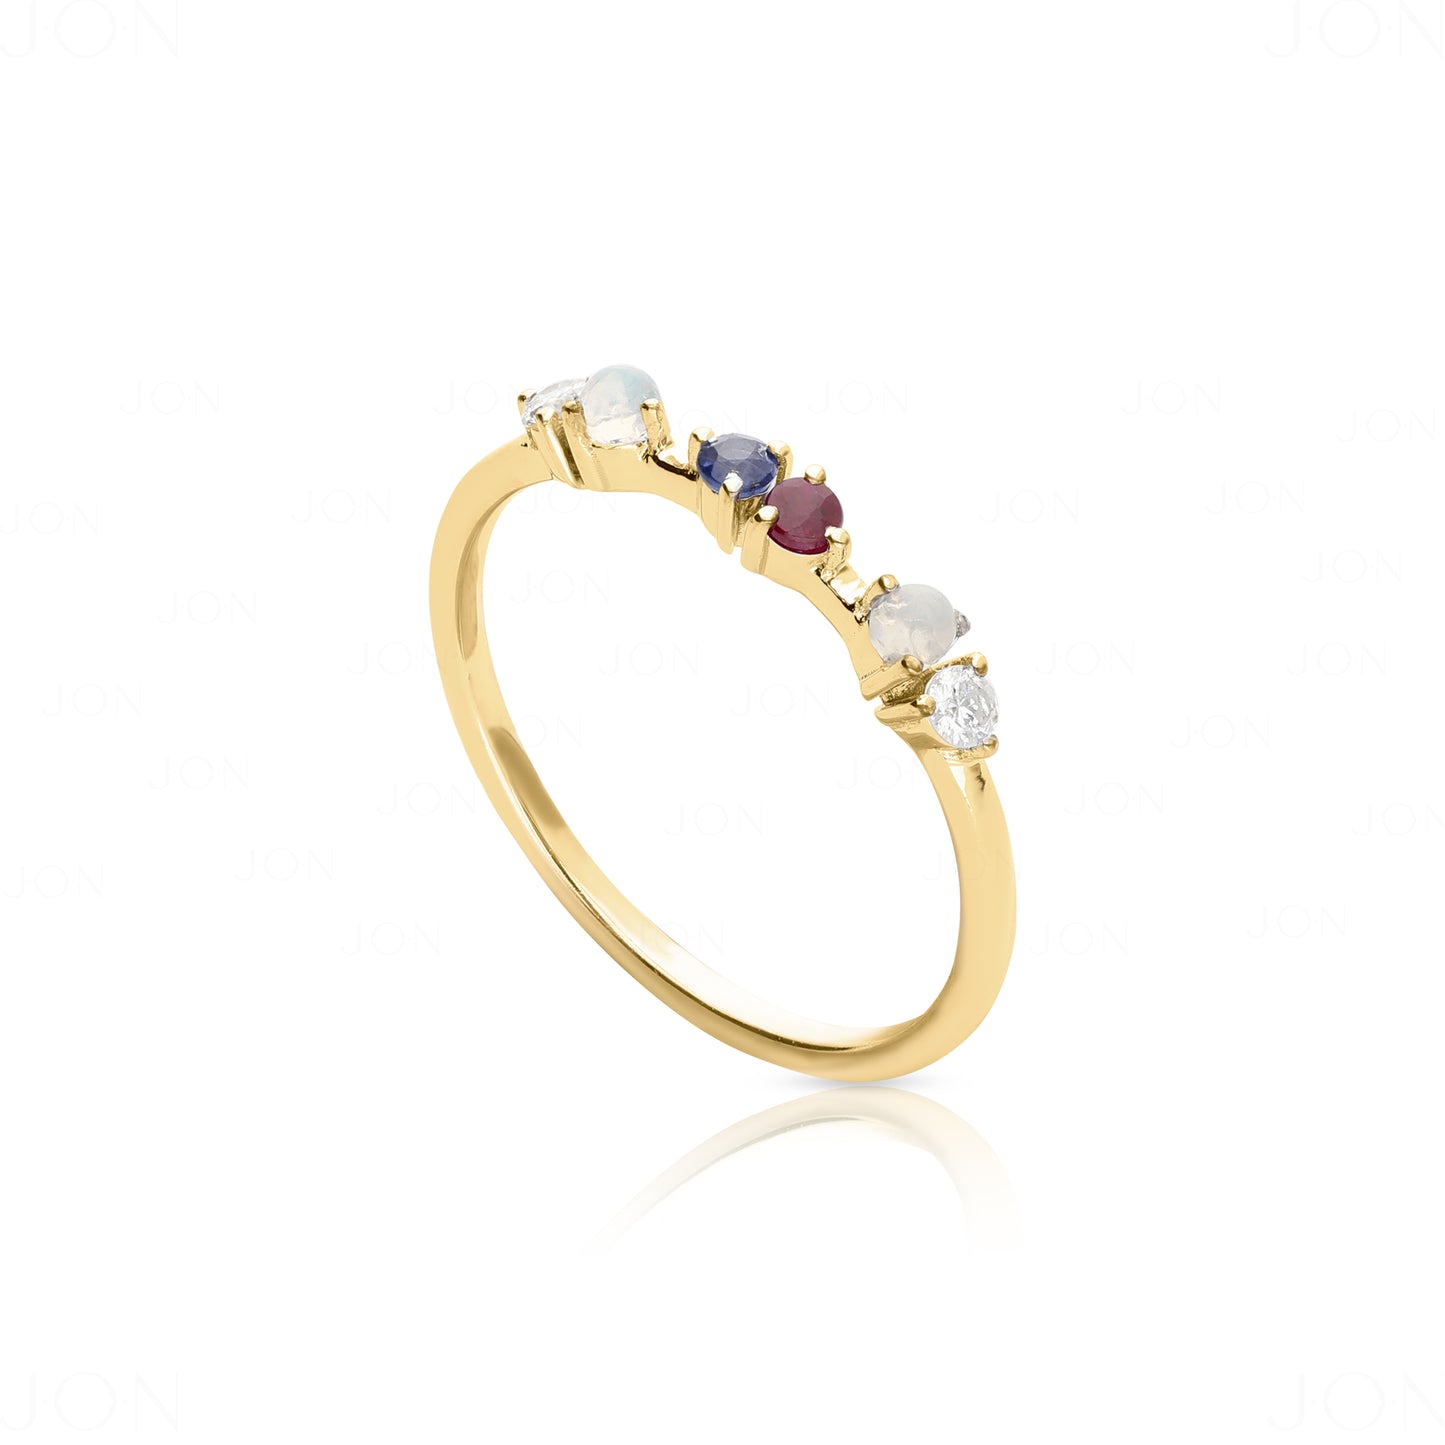 14K Gold Genuine Diamond Opal Ruby And Blue Sapphire Gemstone Friendship Ring